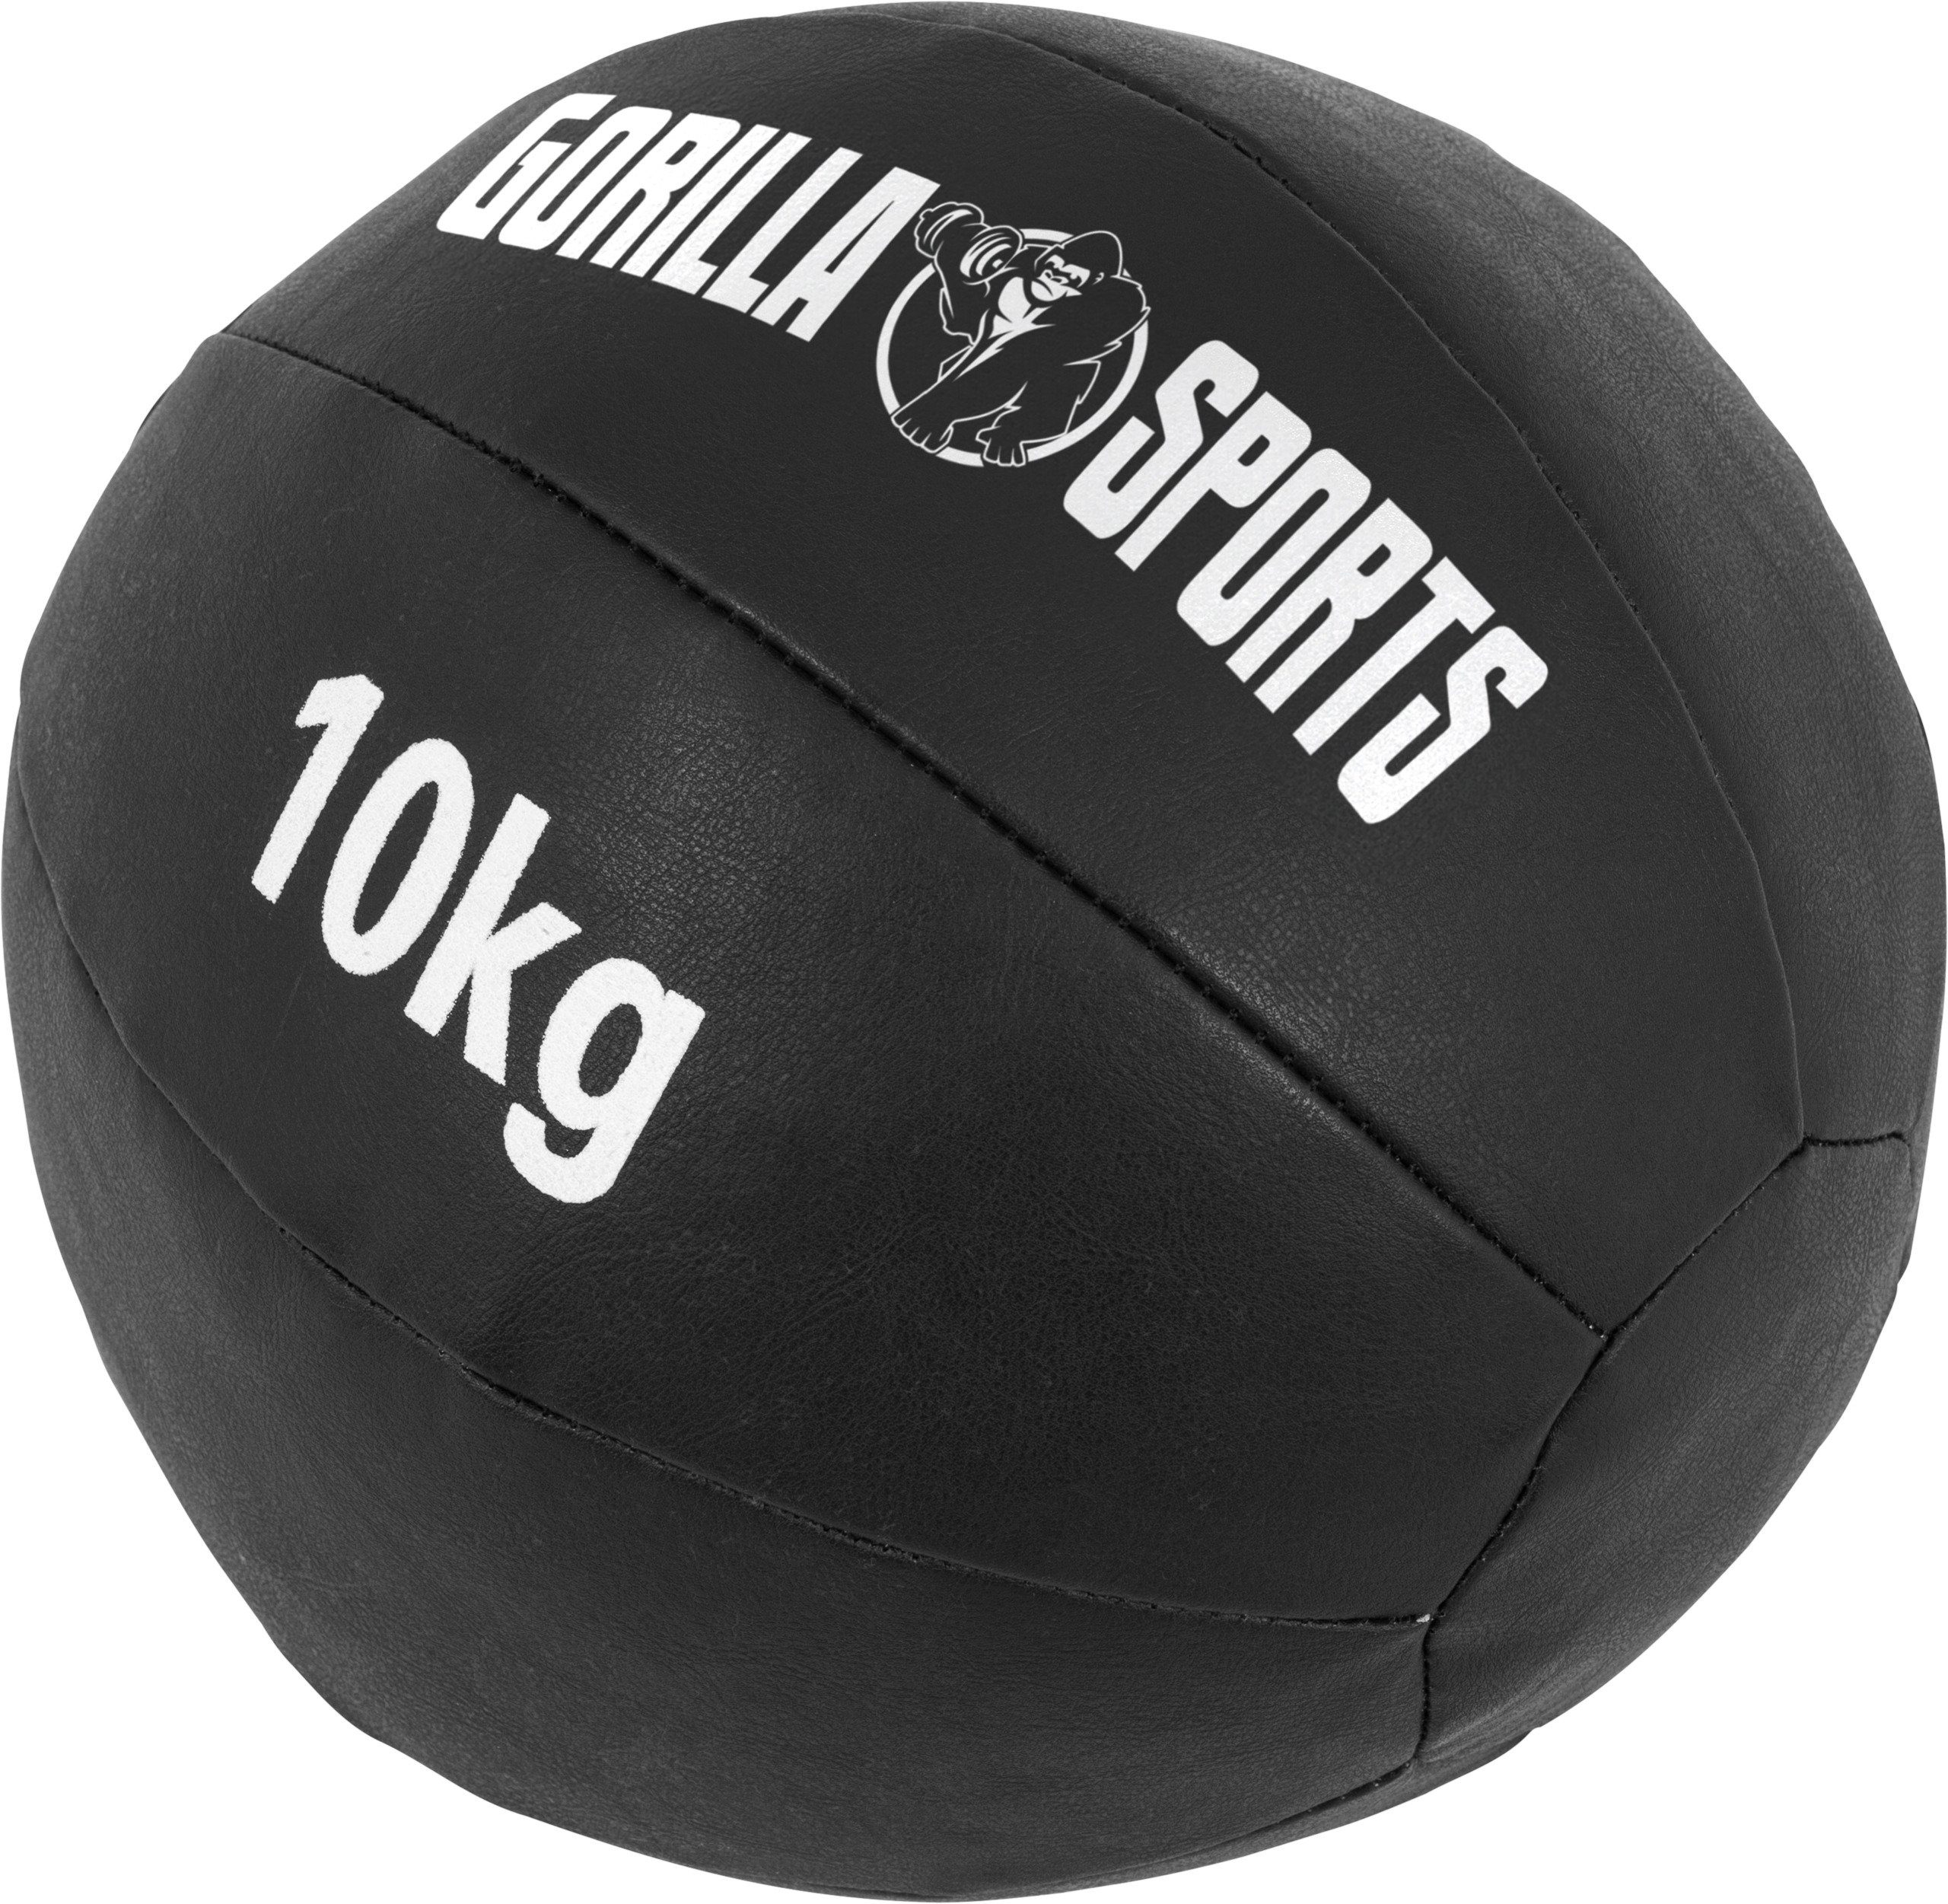 kg GORILLA Einzeln/Set, Medizinball 29cm, Leder, Fitnessball, Trainingsball, SPORTS 10 Gewichtsball aus